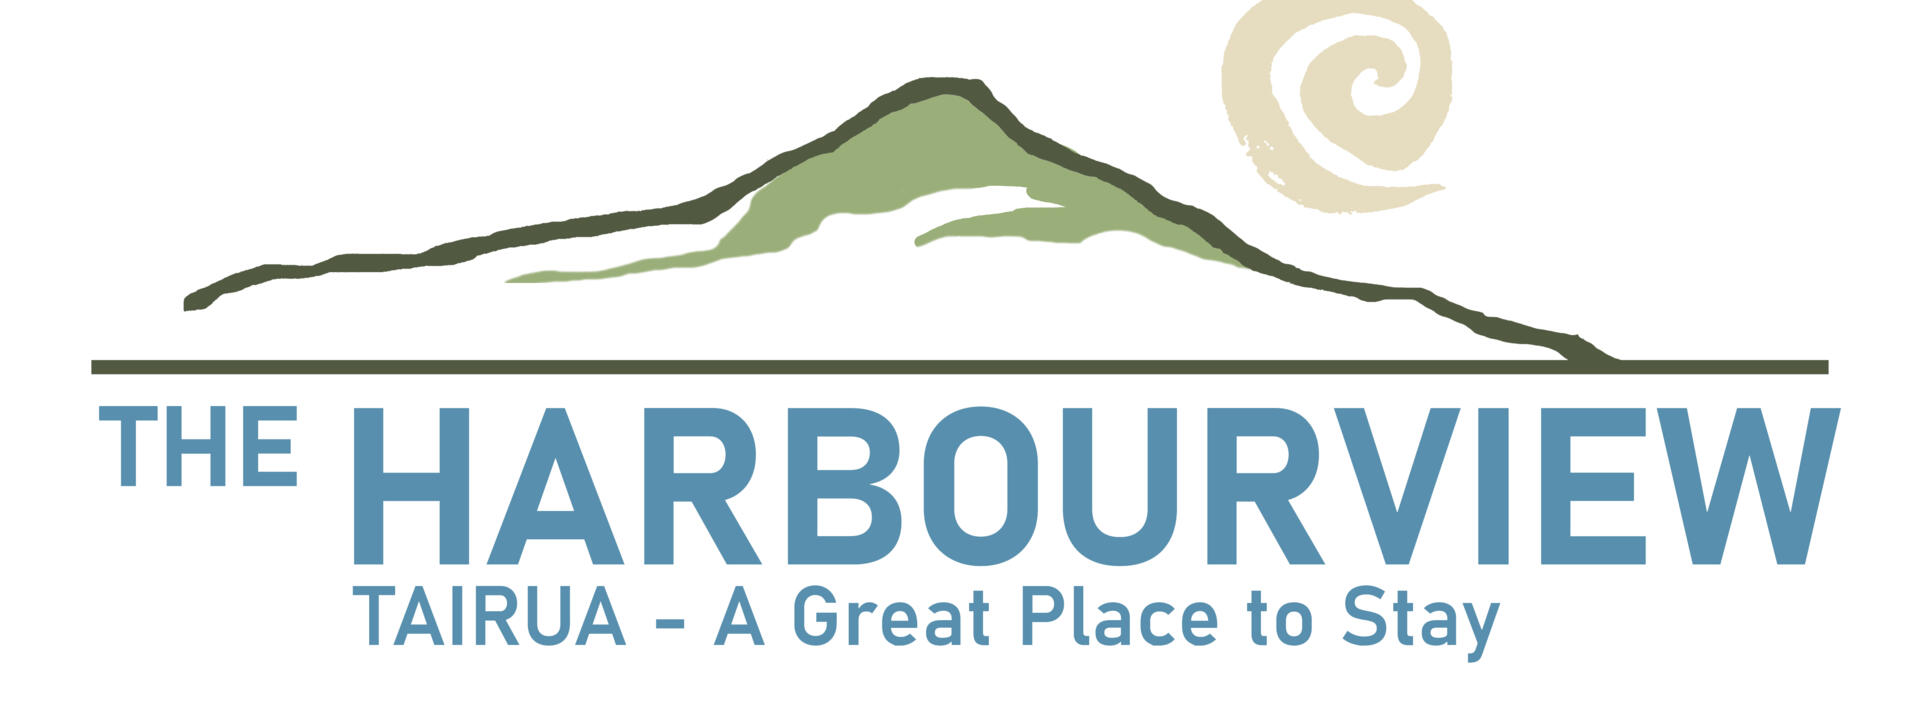 The Harbourview logo.jpg